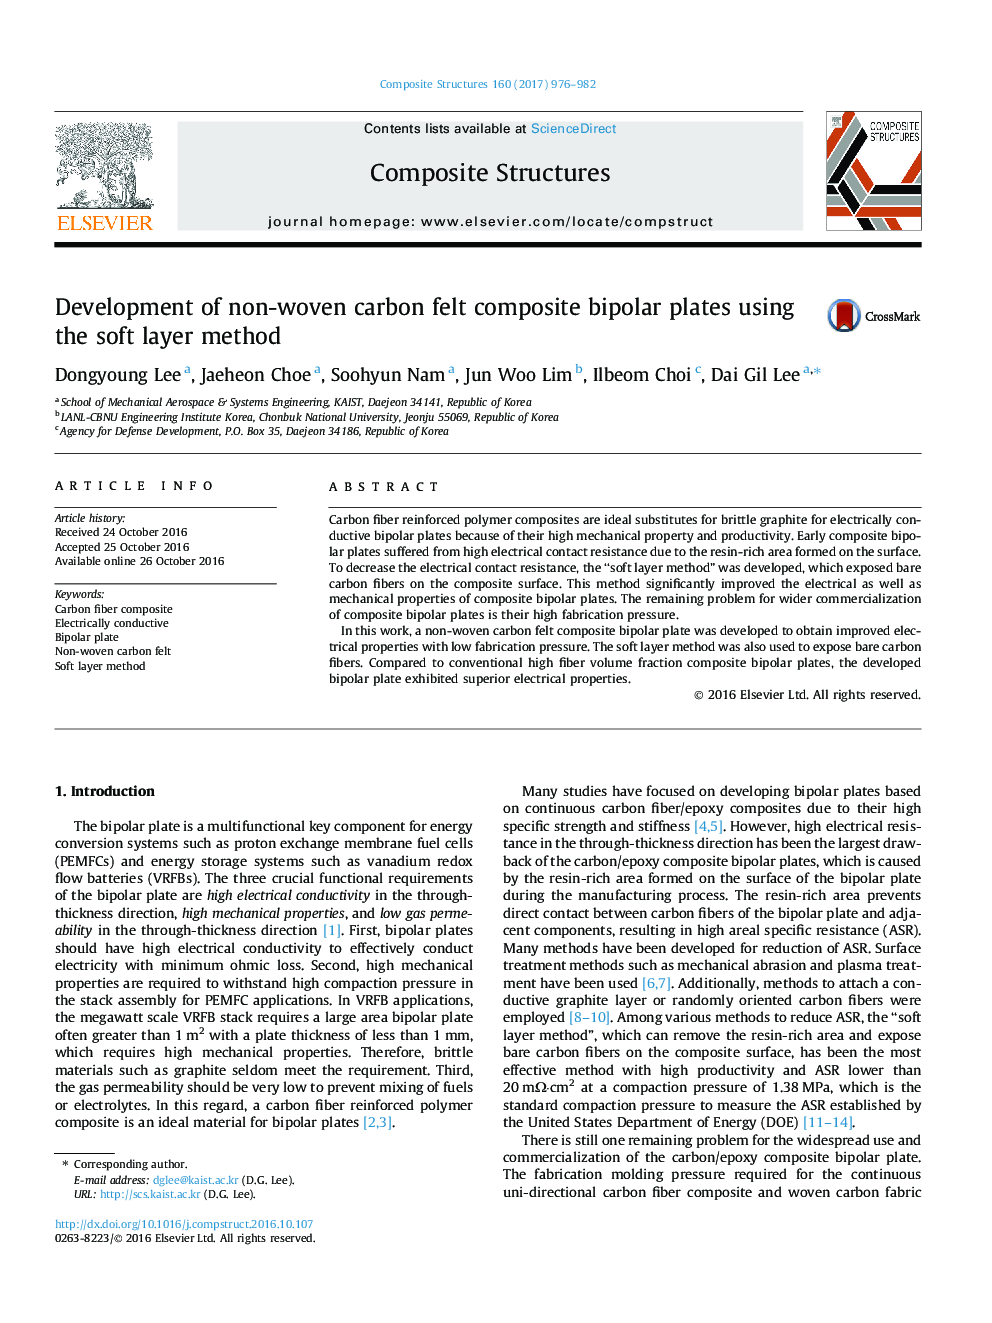 Development of non-woven carbon felt composite bipolar plates using the soft layer method